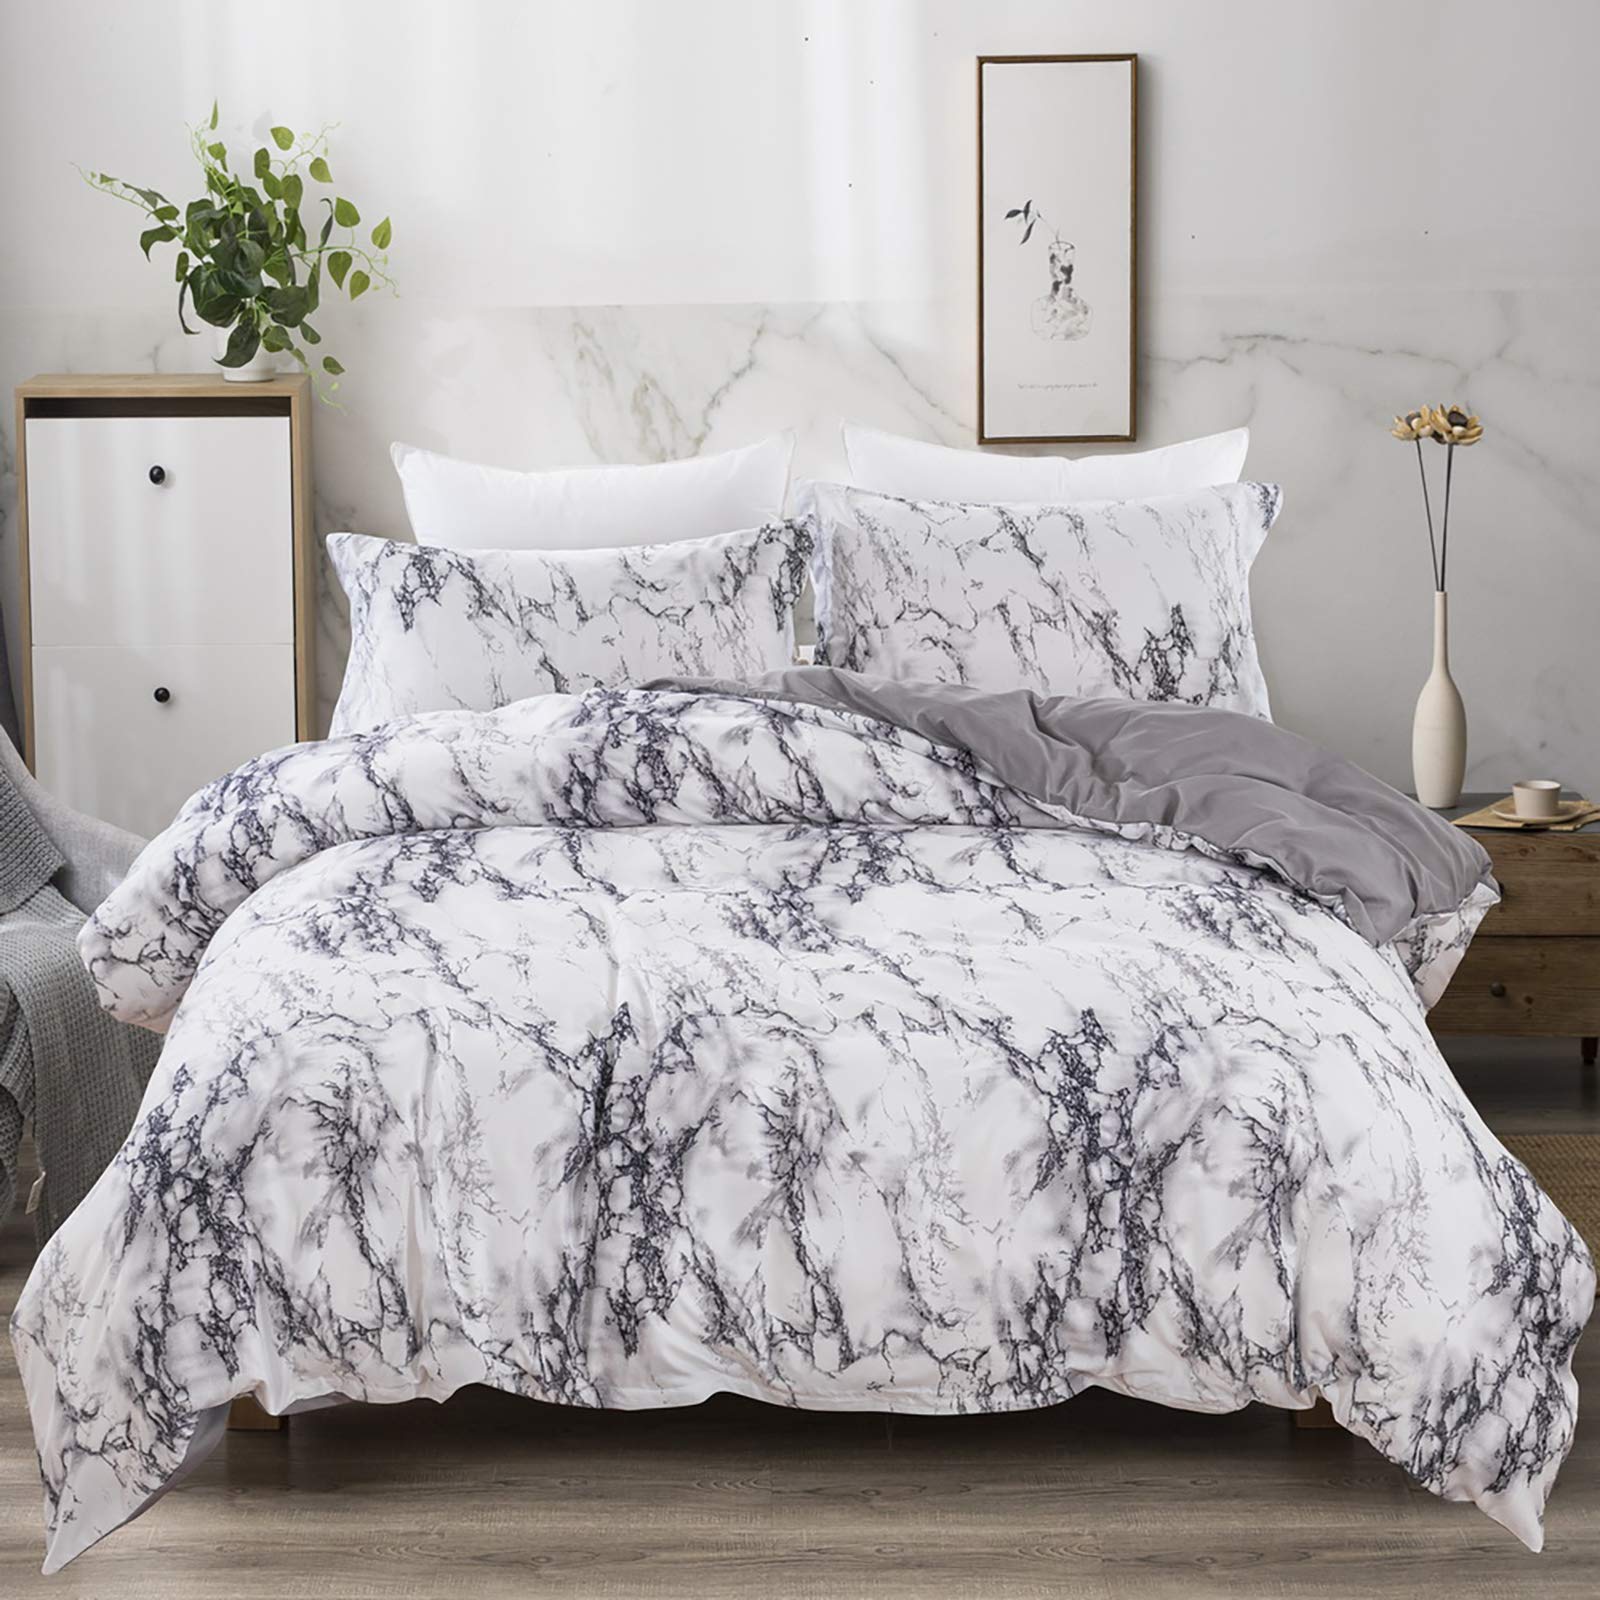 Marble Comforter Set King White Grey Marble Printed Bedding Down Alternative Comforter Set for All Season, Soft Microfiber Filling Bedding Duvet Se...